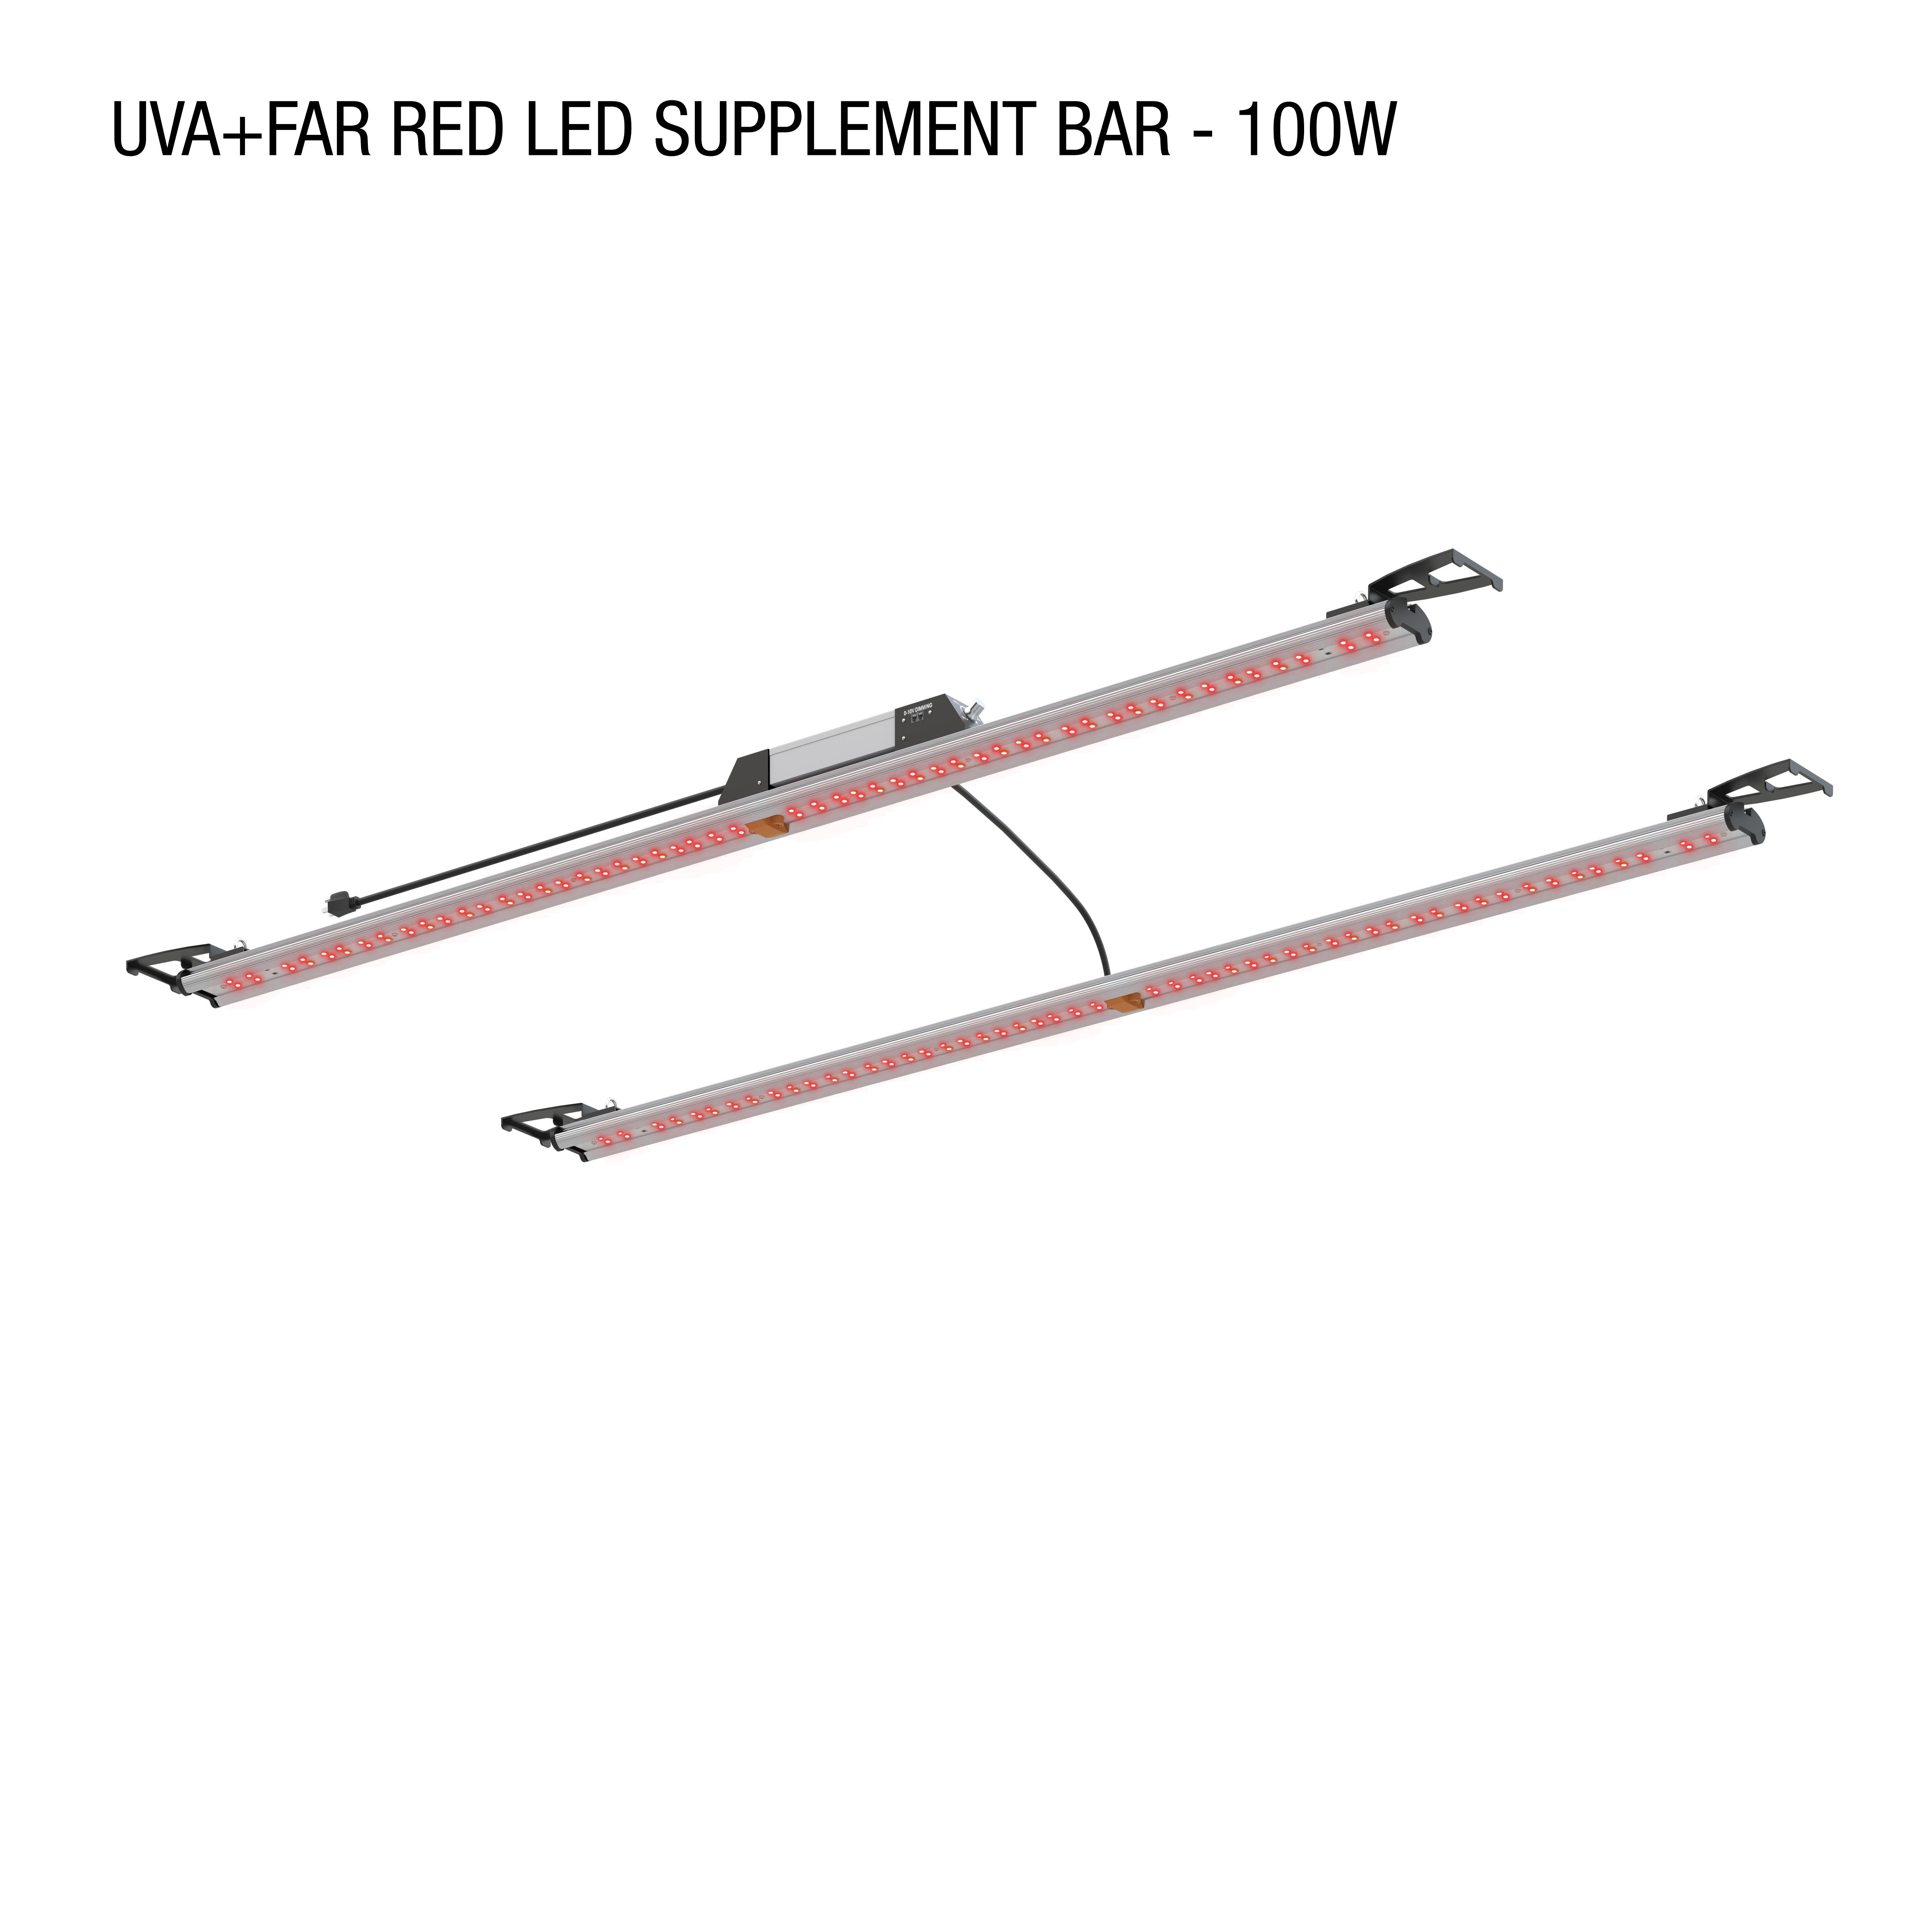 UVA+FR Supplemental Spectrum Light Bar - 100W